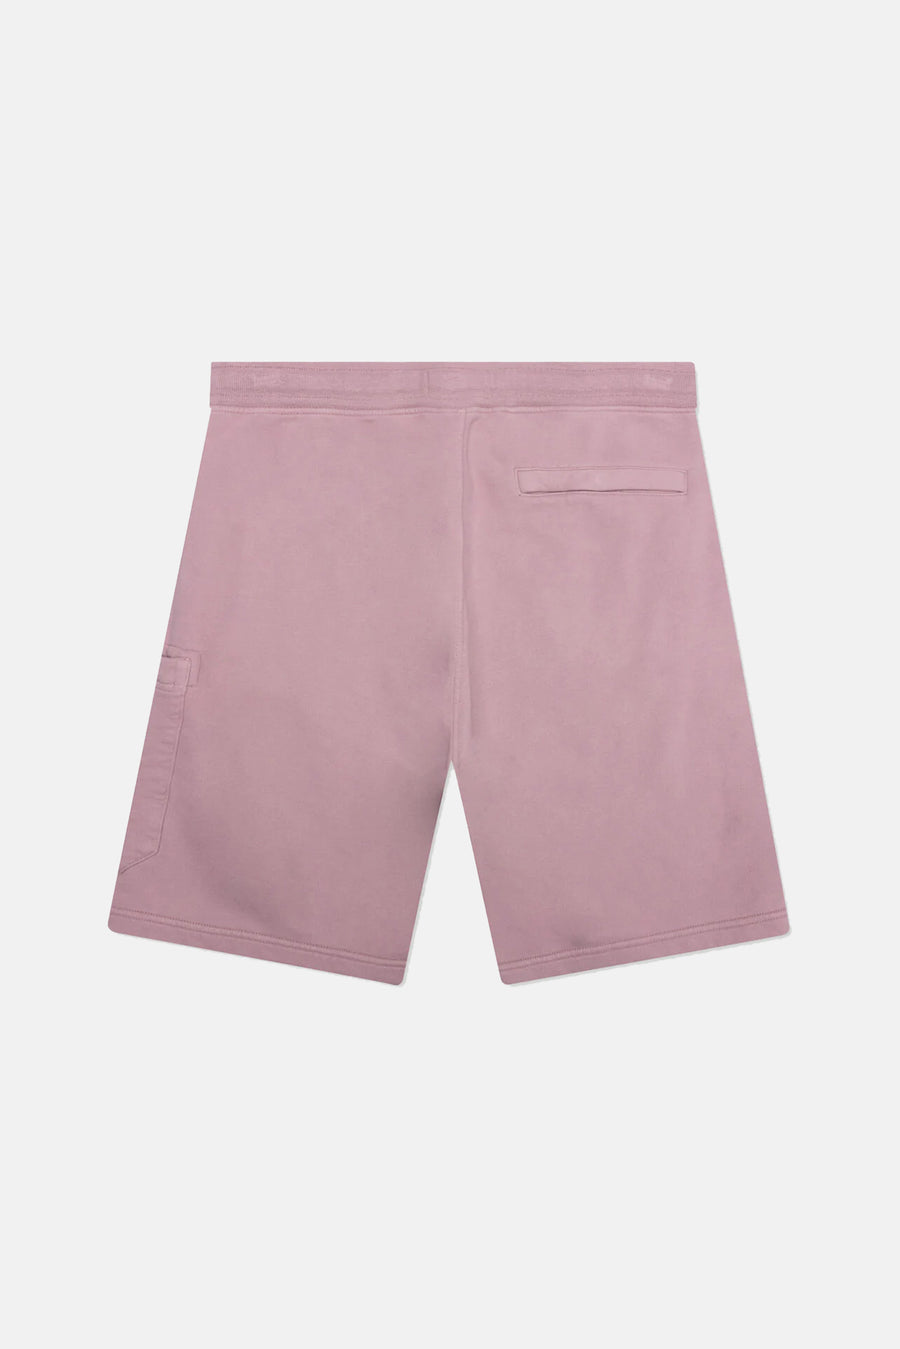 Brushed Fleece Bermuda Shorts Rose Quartz